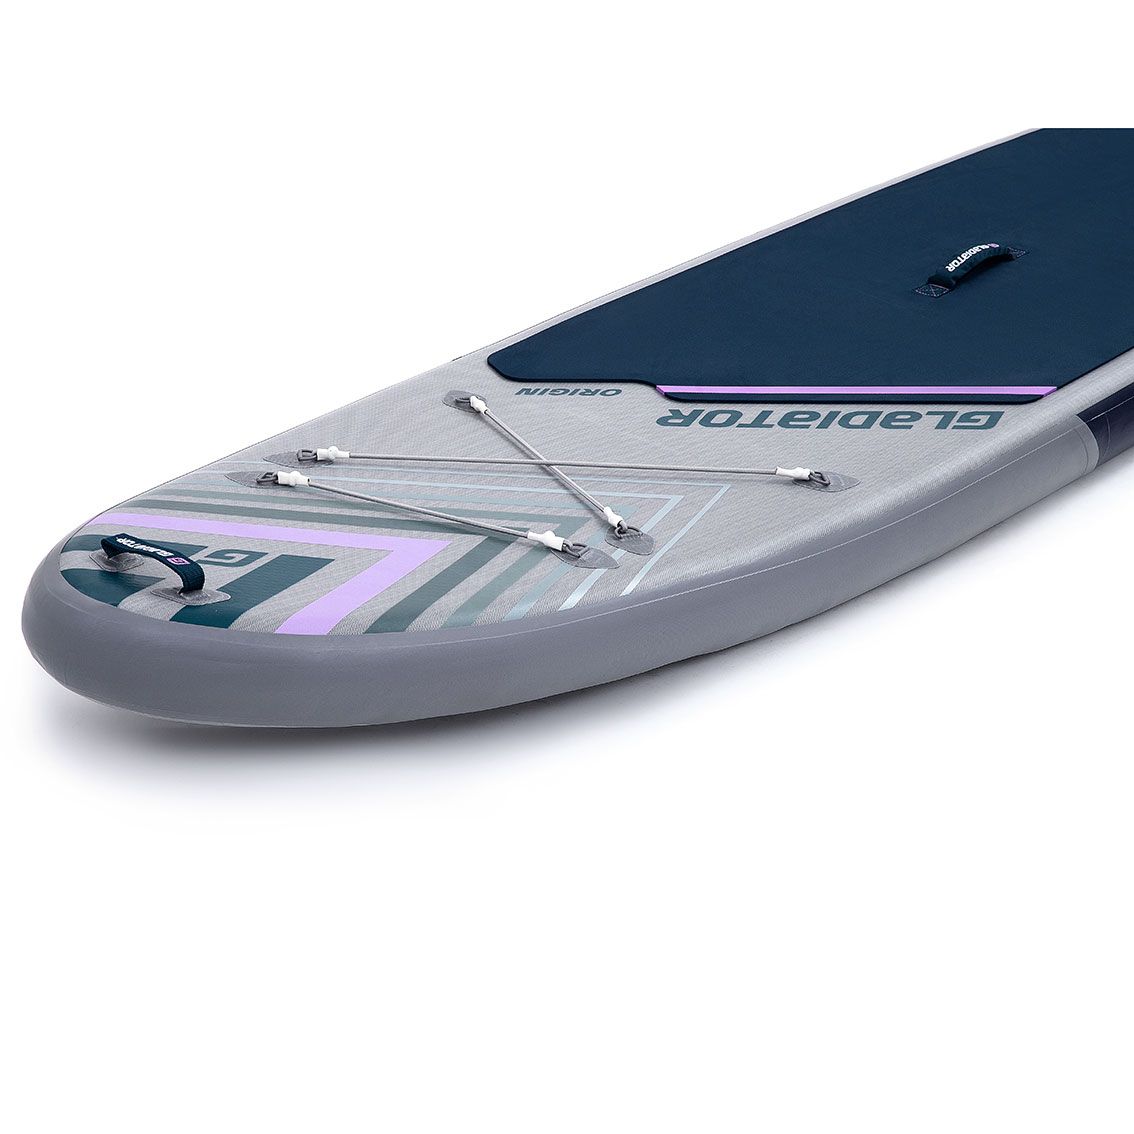 Gladiator Origin 10'4" x 30" x 4.75" Inflatable Paddleboard